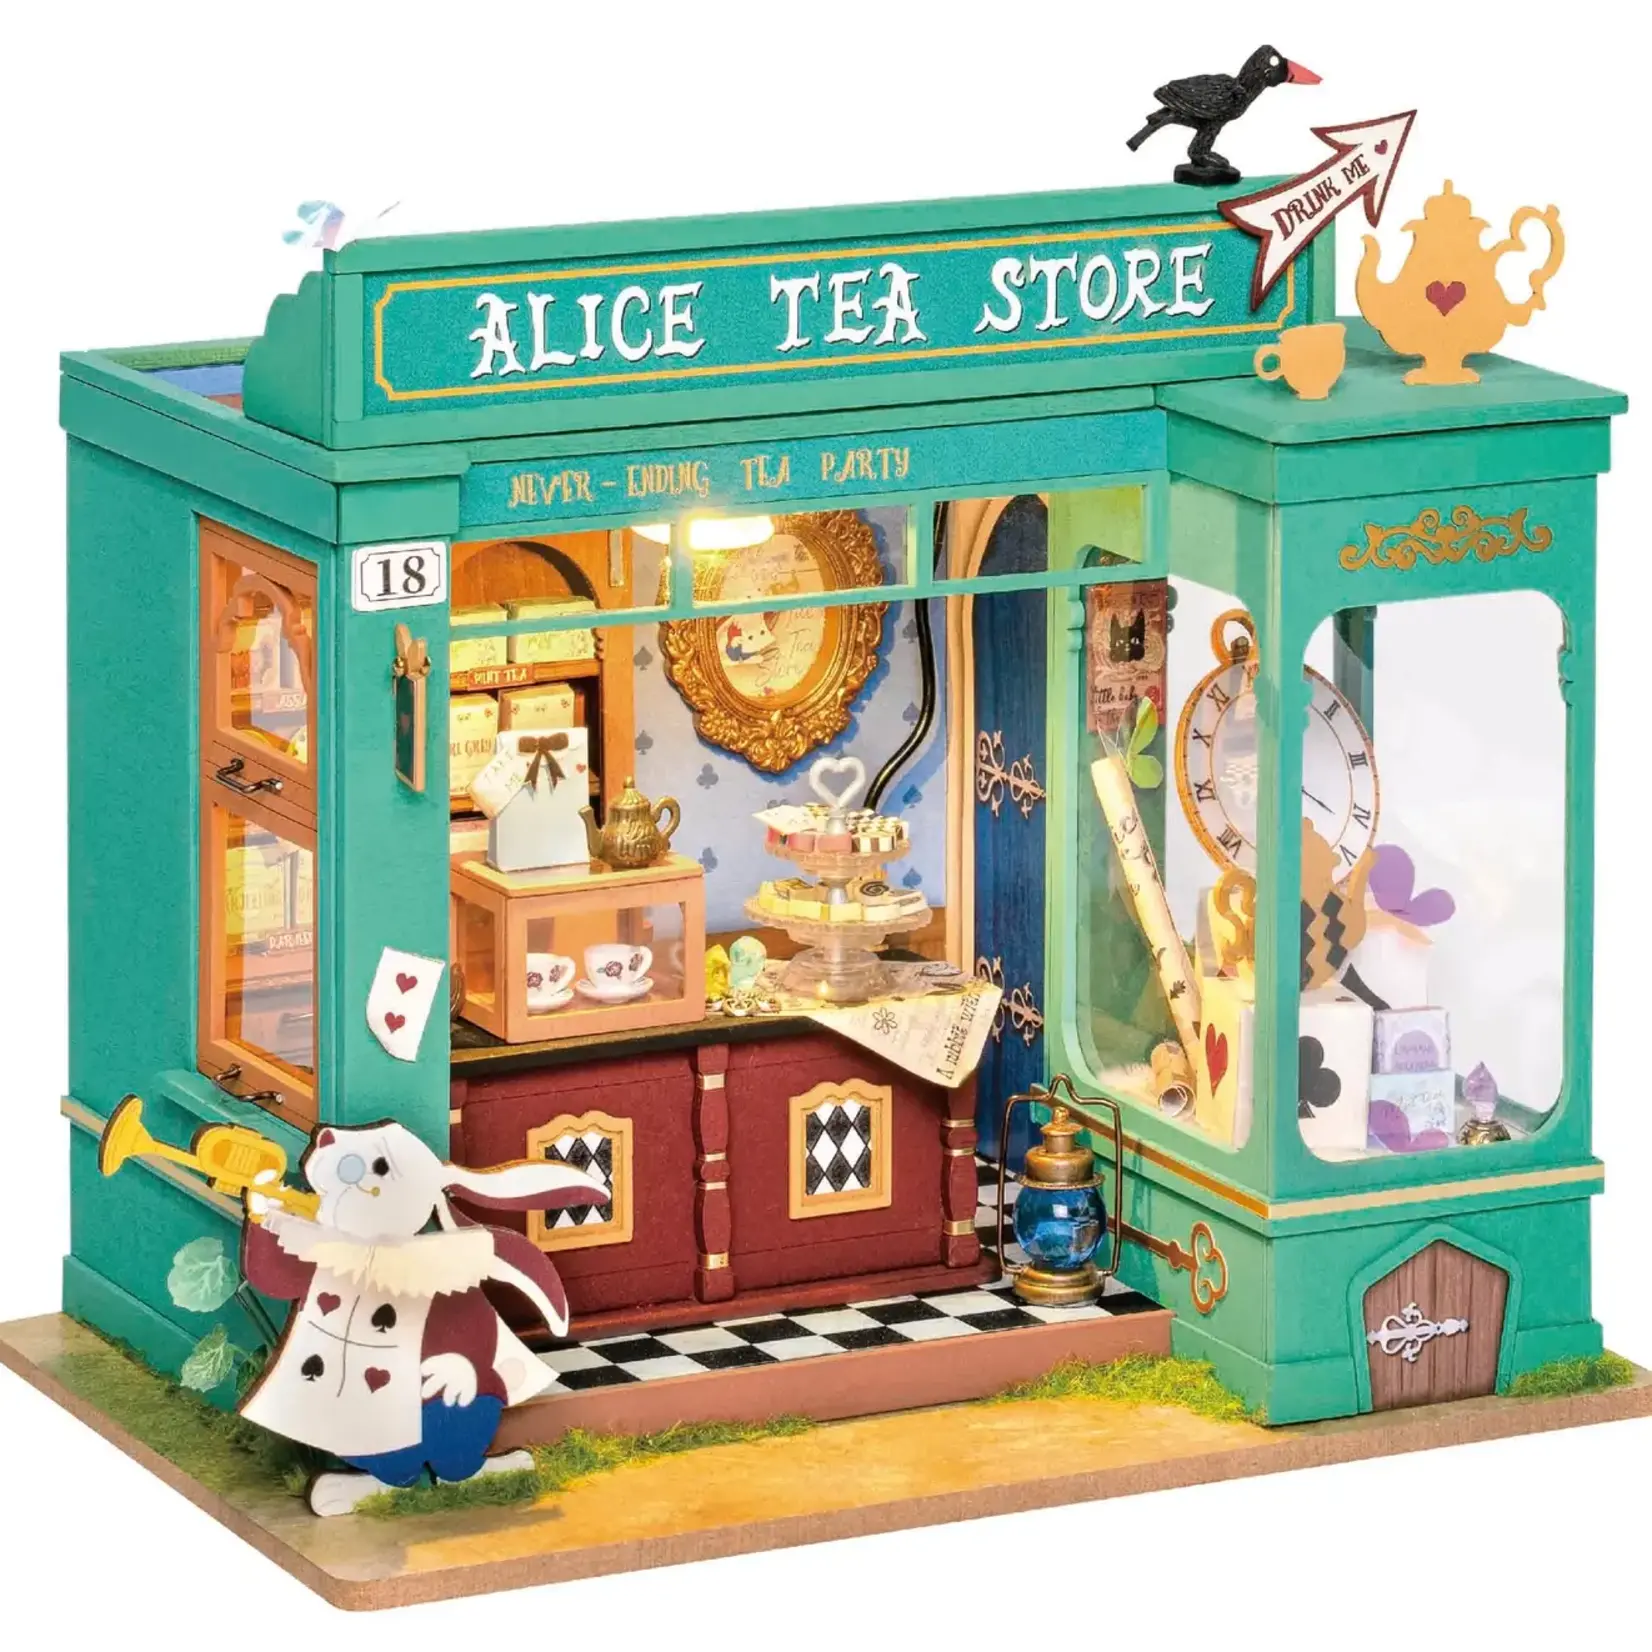 DG156, DIY Miniature House Kit: Alice's Tea Store